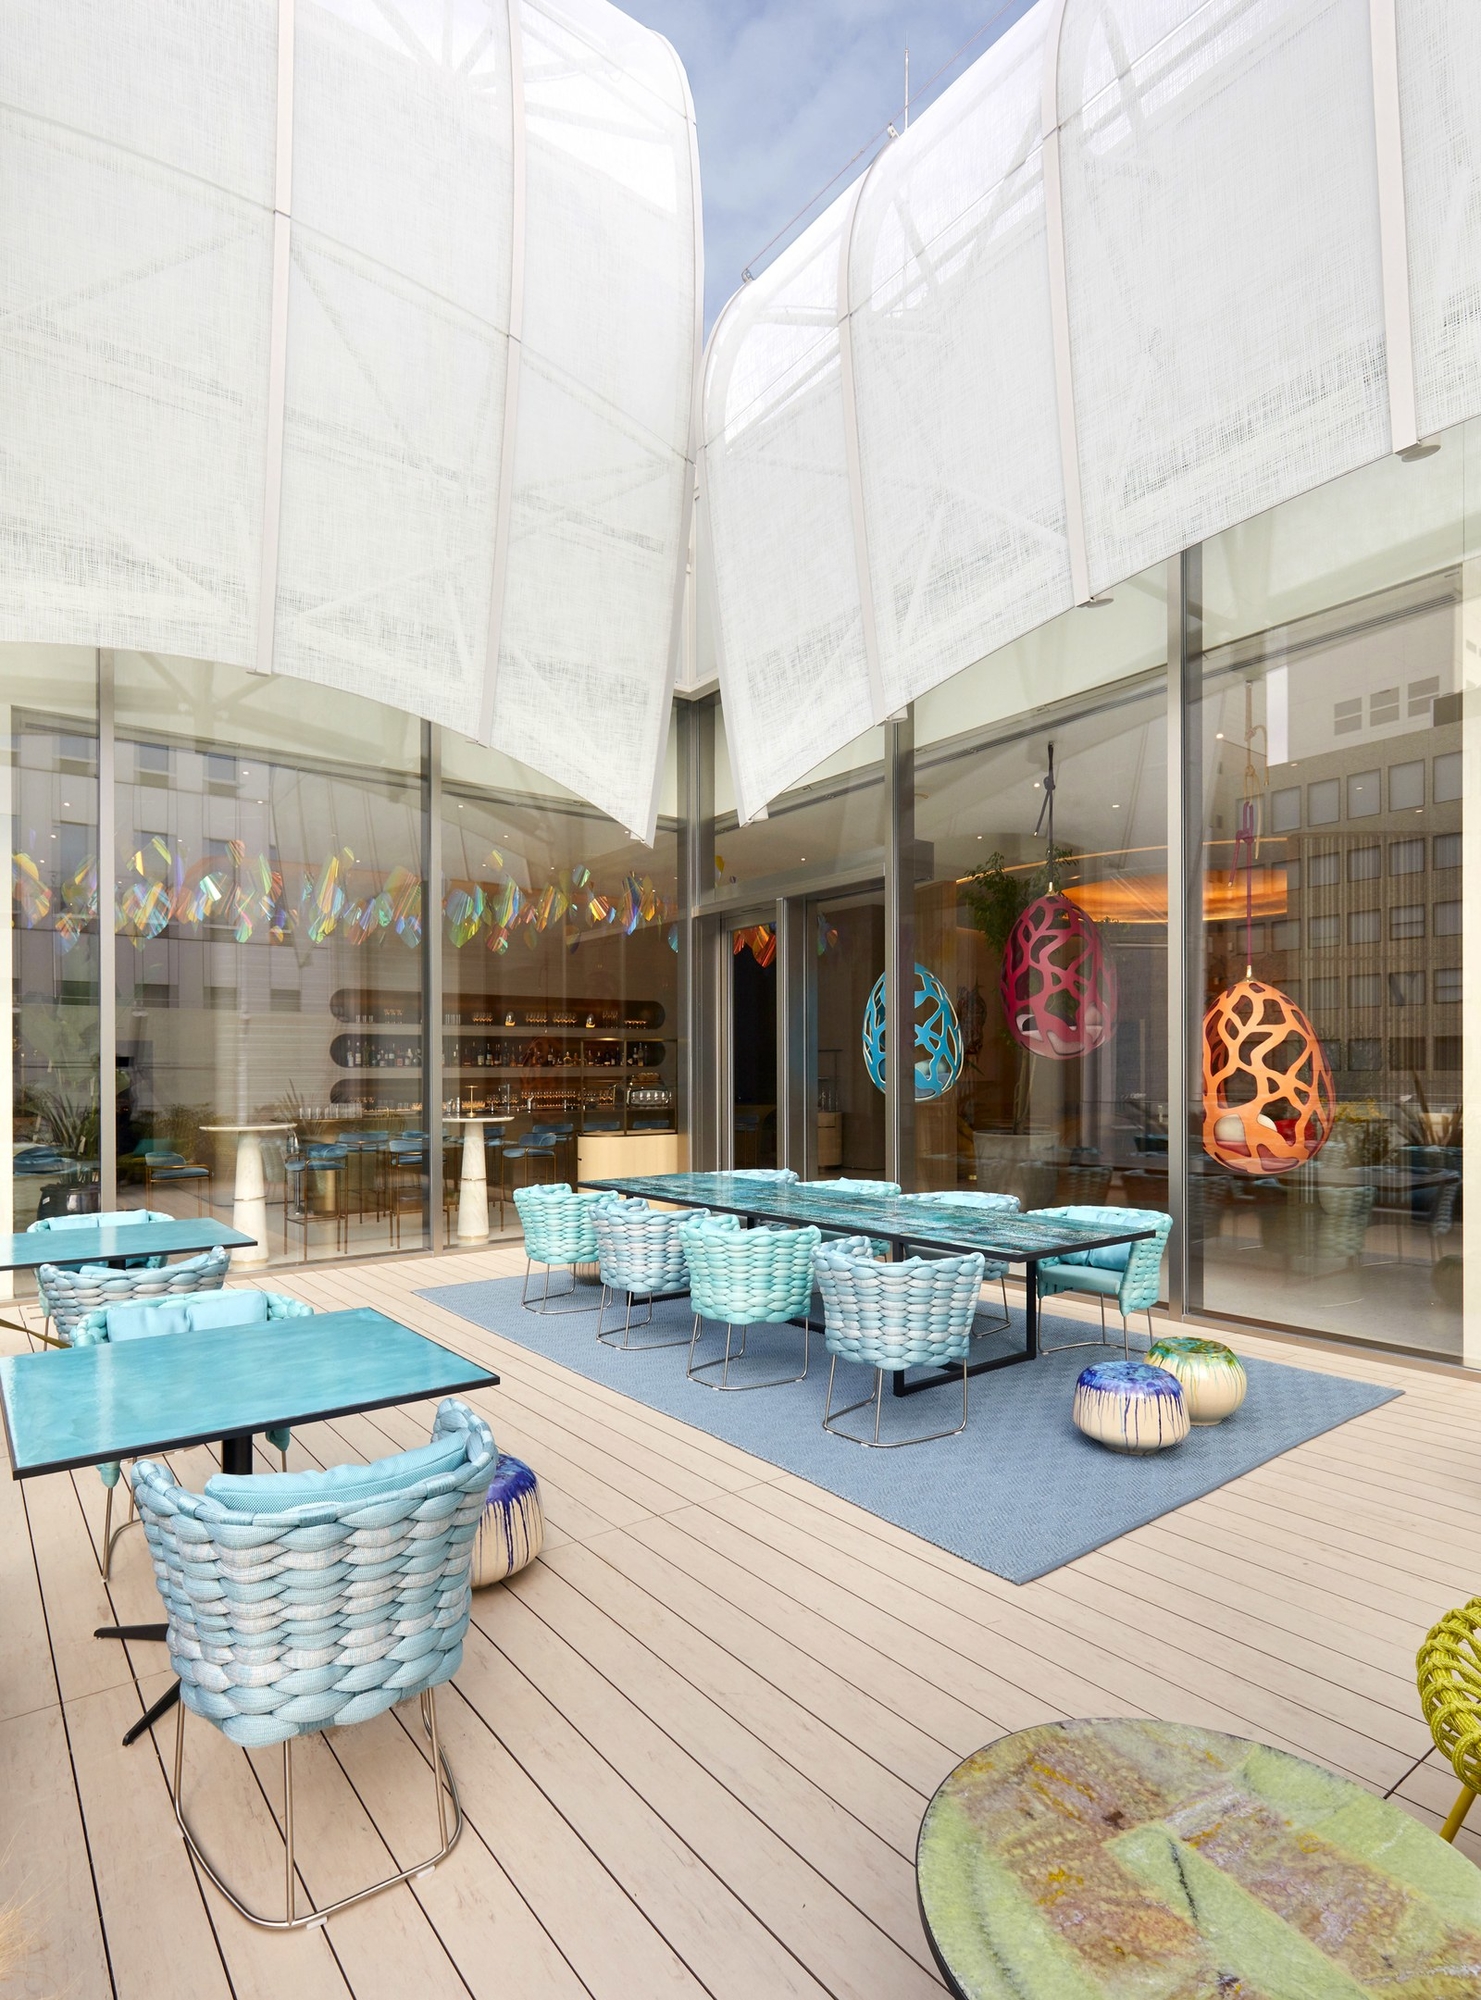 Inside Louis Vuitton's first café and restaurant - Commercial